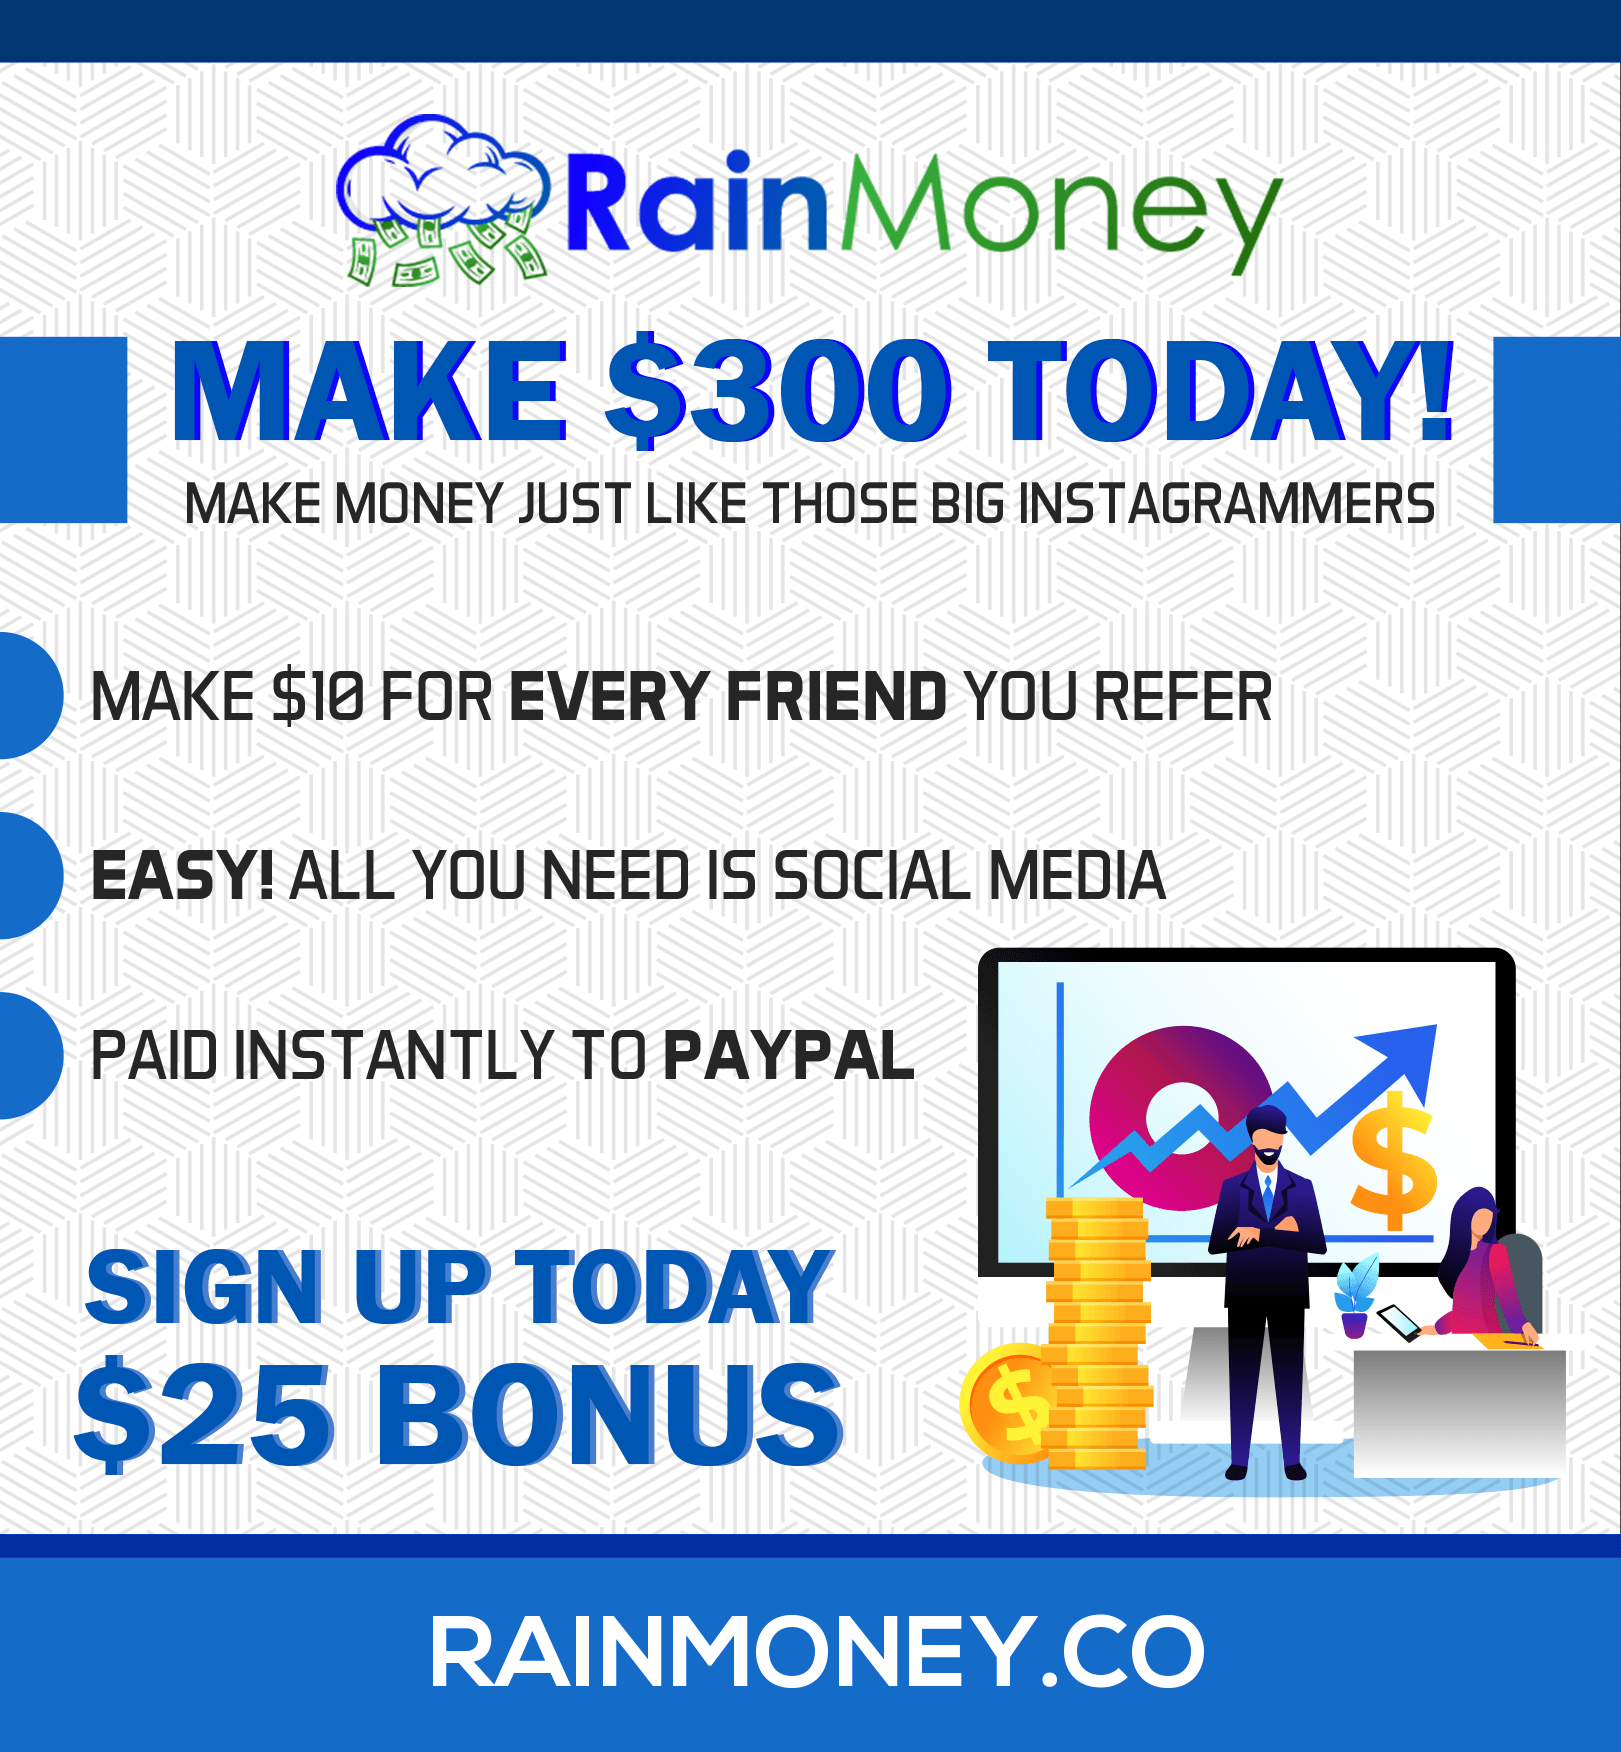 Monetize Your Social Media & Make Money Rain - RainMoney